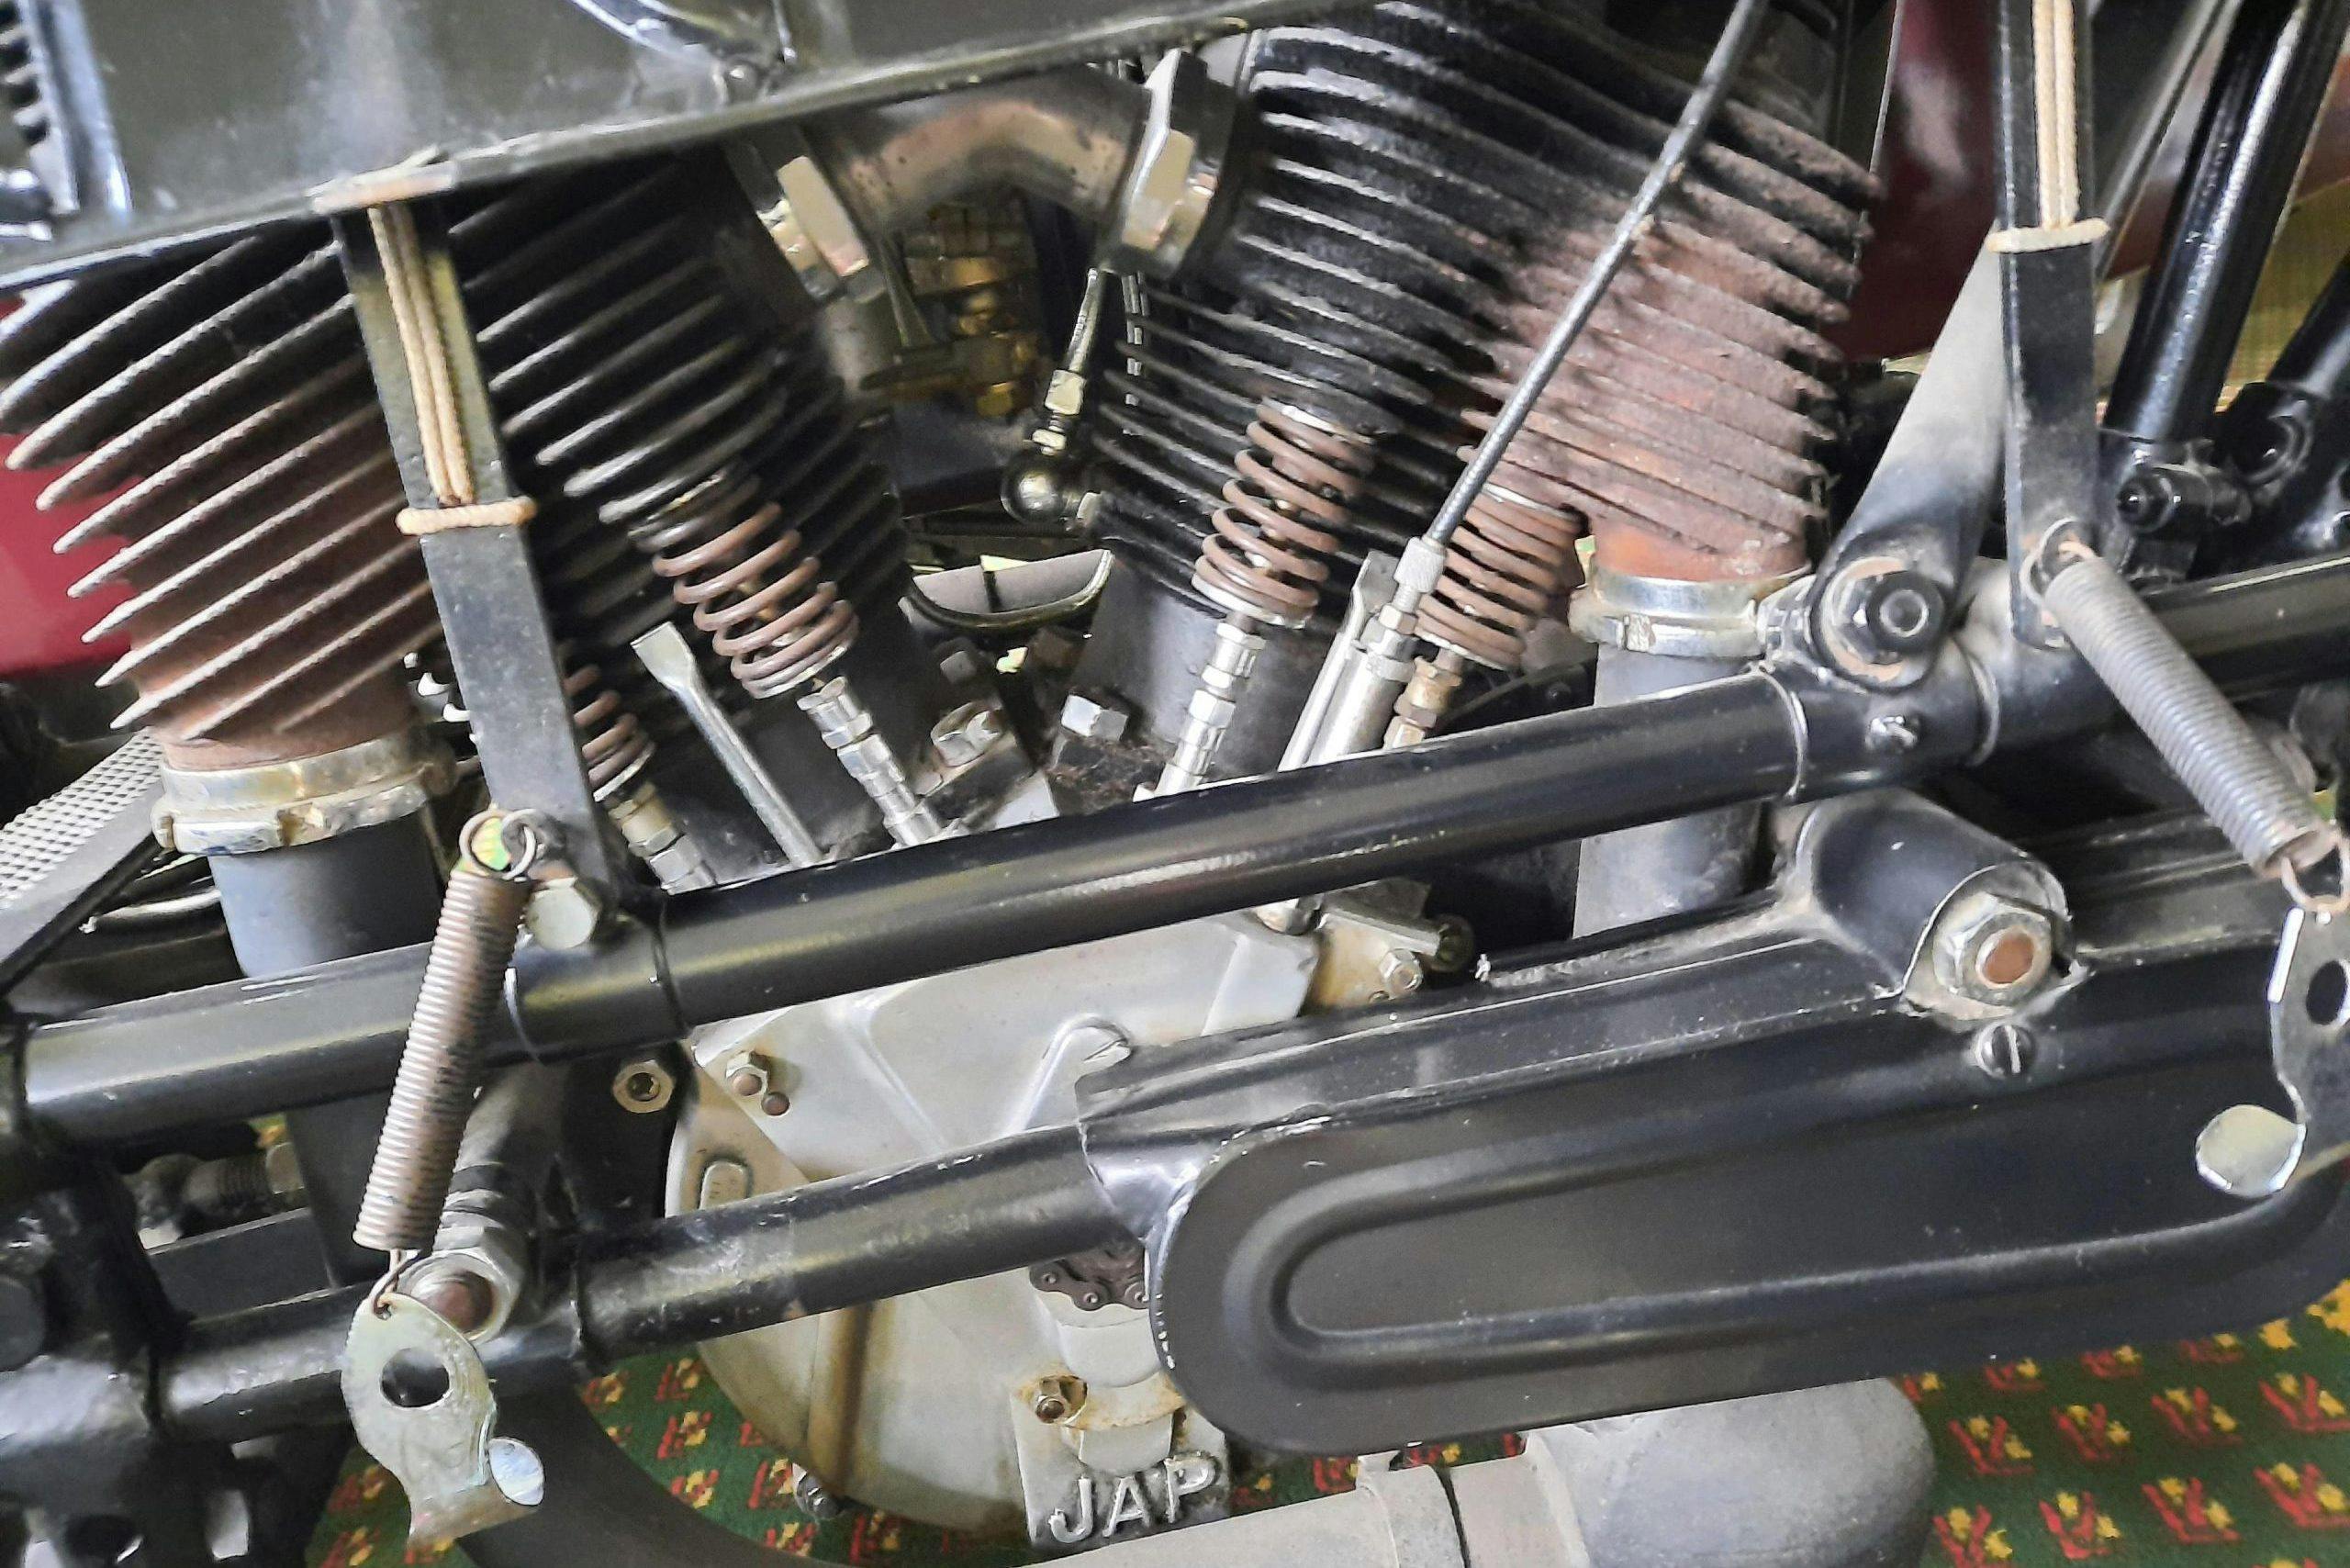 1925 Seal 980CC Motorcycle engine close